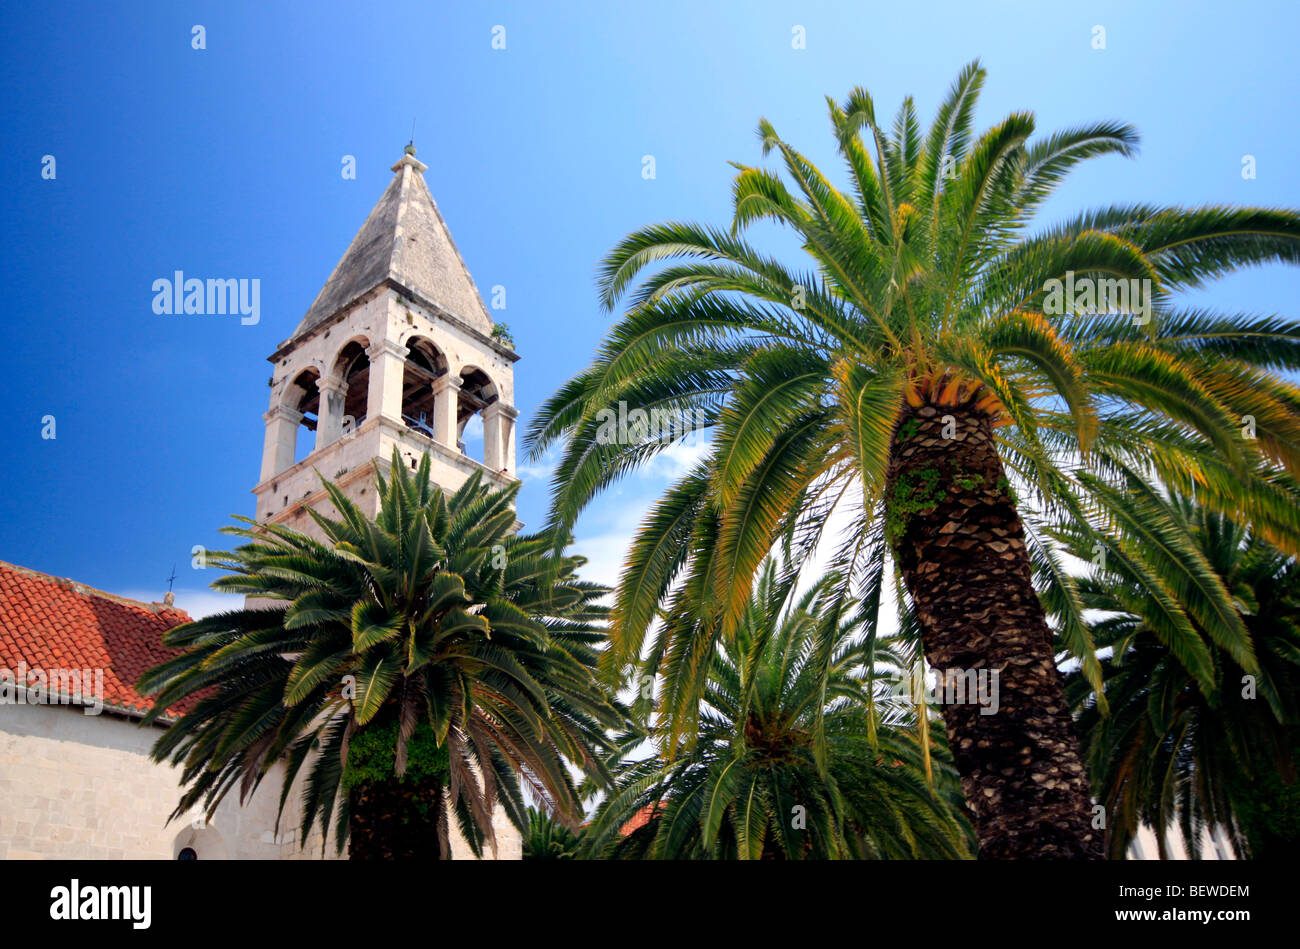 Palm trees in front of church spire of Sveti Nikola Monastery, Trogir, Croatia, low angle view Stock Photo